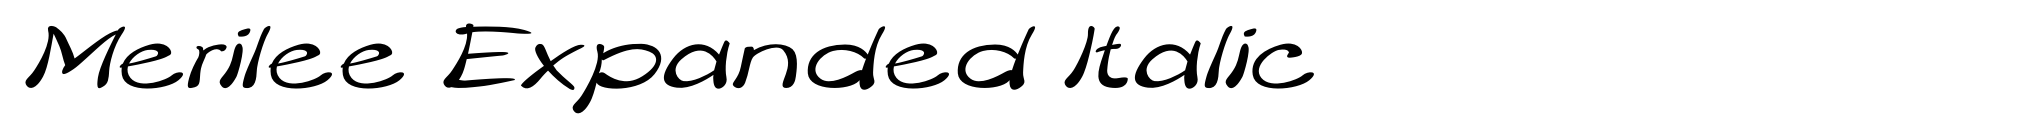 Merilee Expanded Italic image